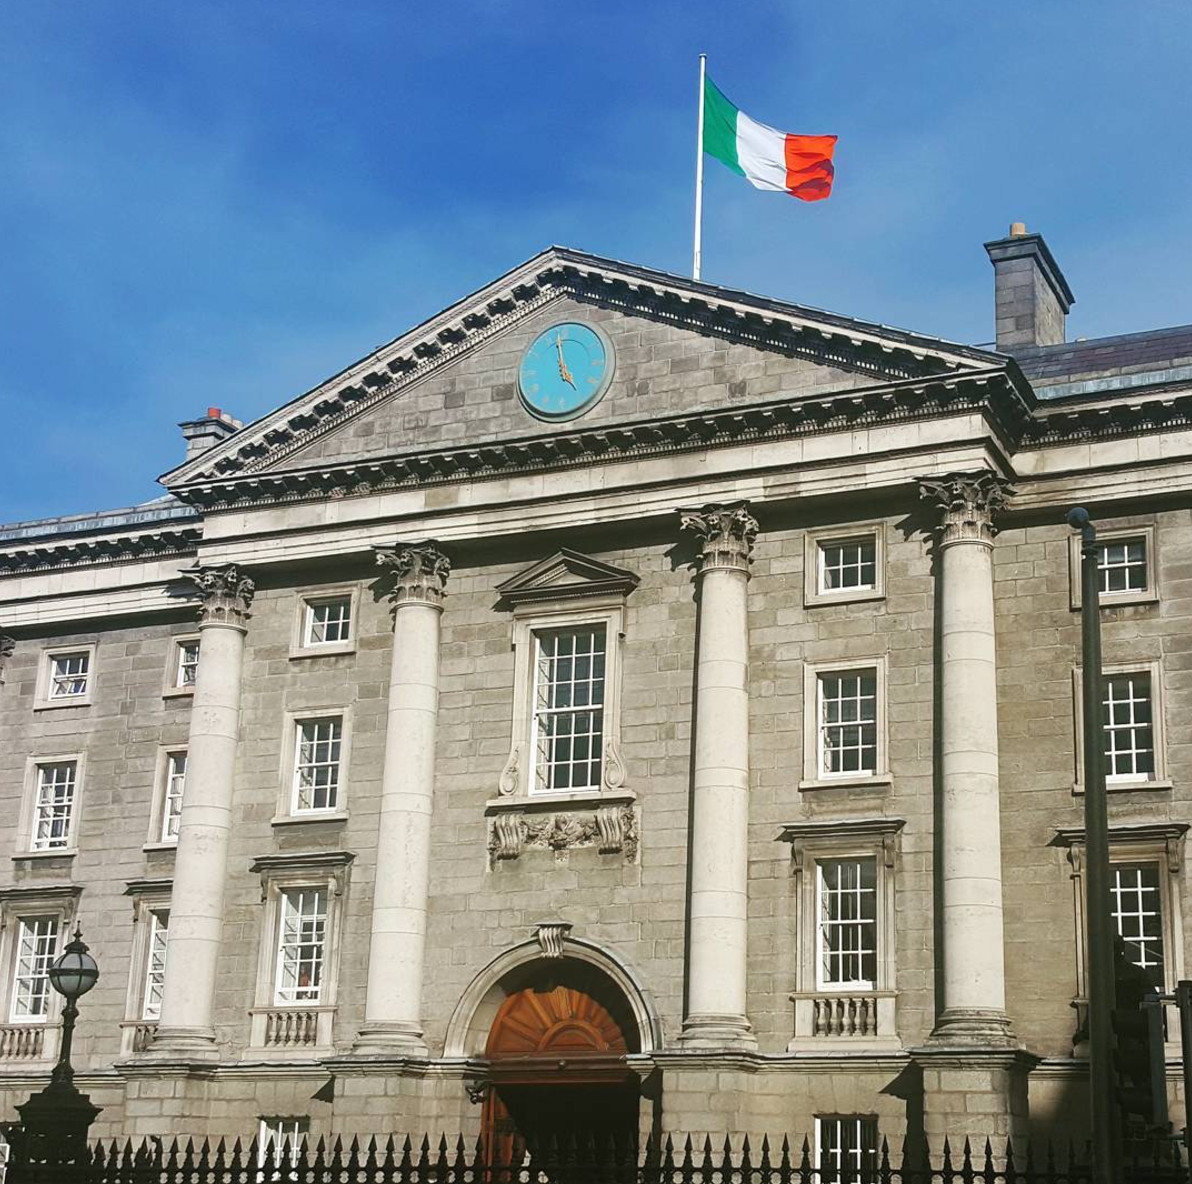 Trinity College - A local's guide to Dublin, Ireland